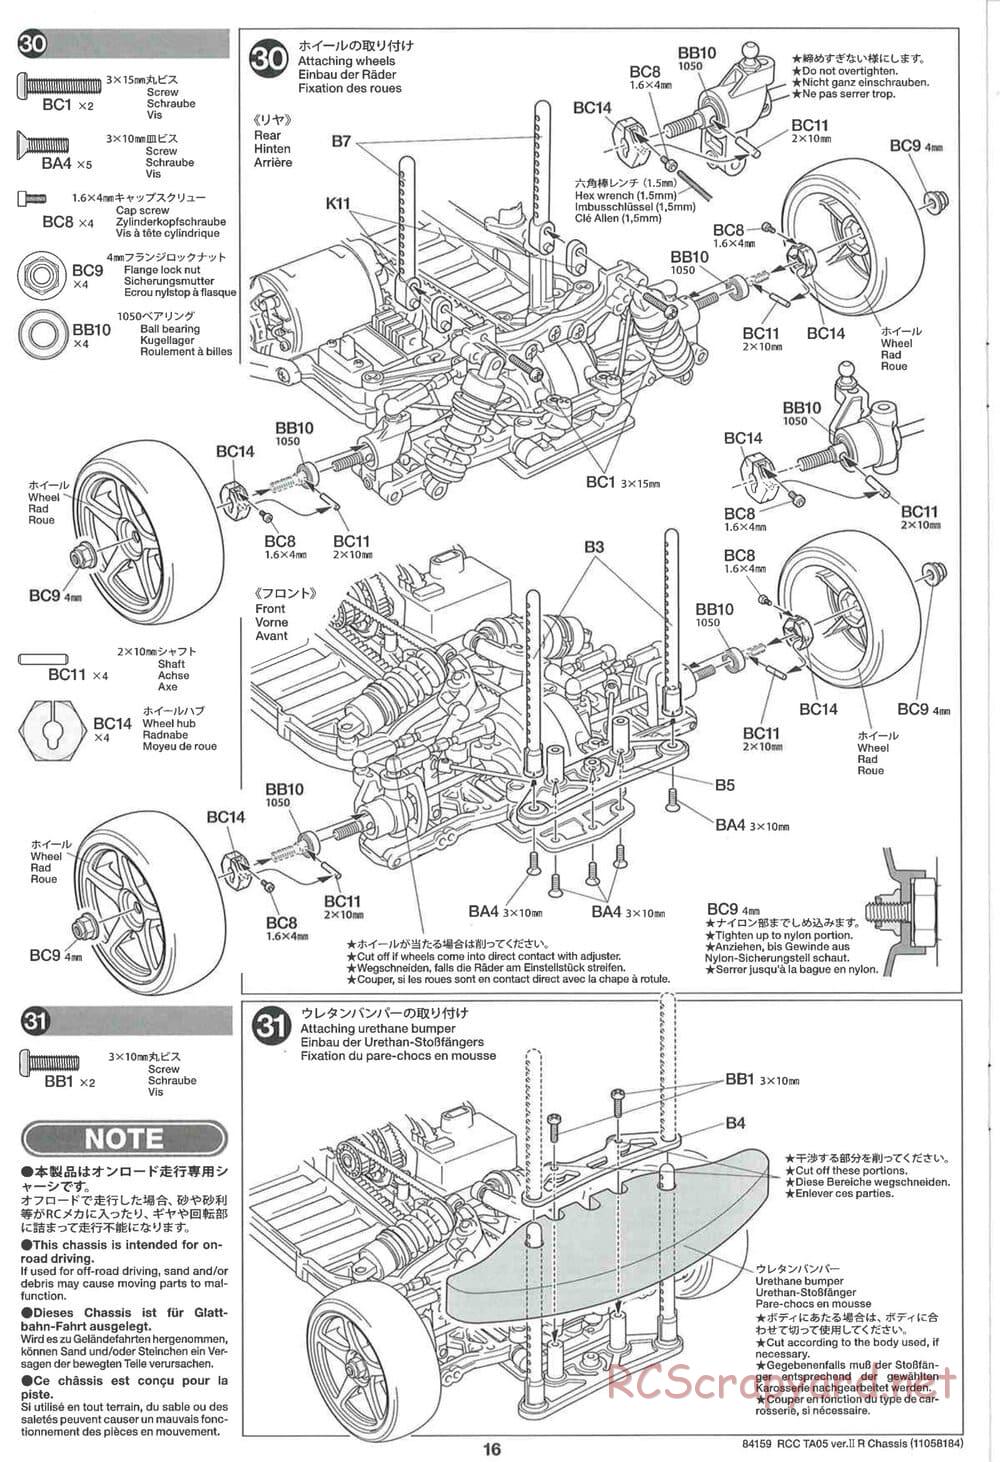 Tamiya - TA05 Ver.II R Chassis - Manual - Page 16